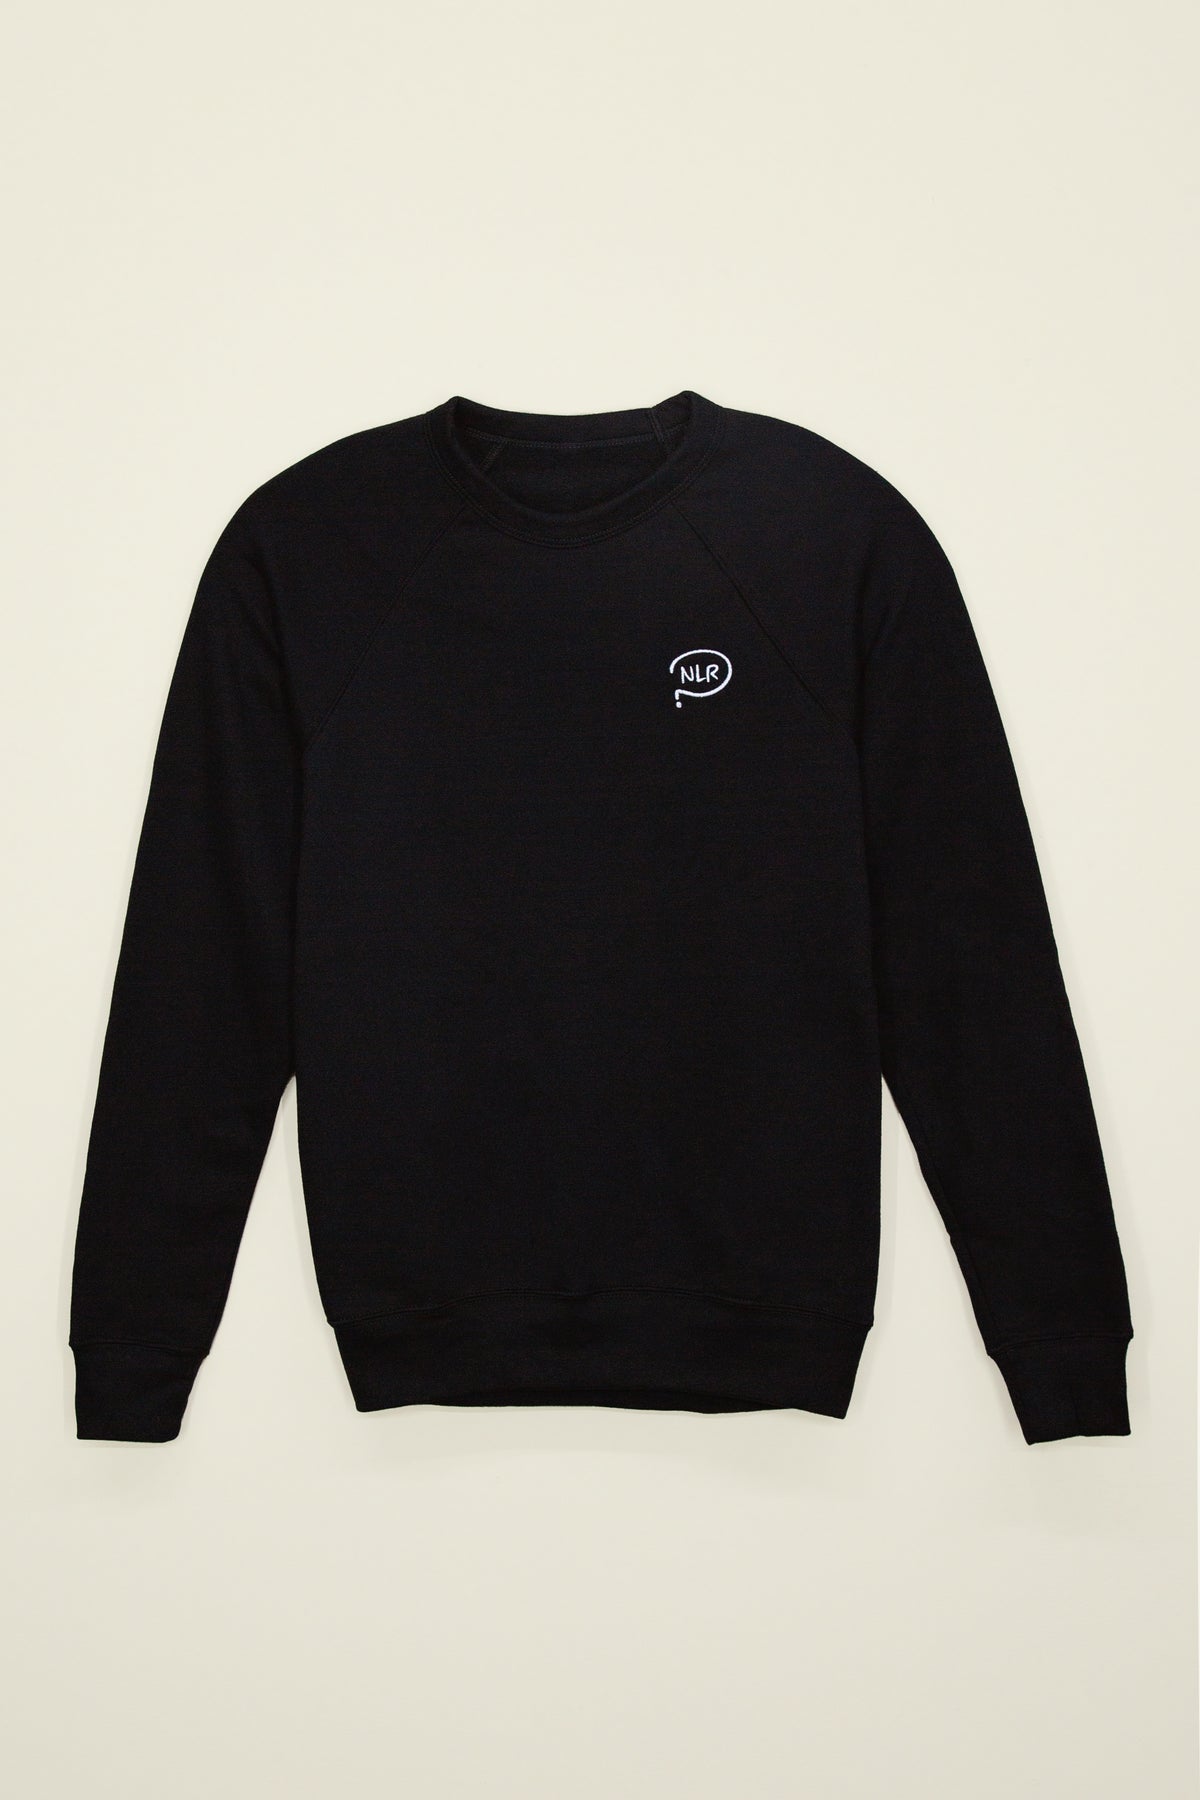 NLR: embroidered sweatshirt